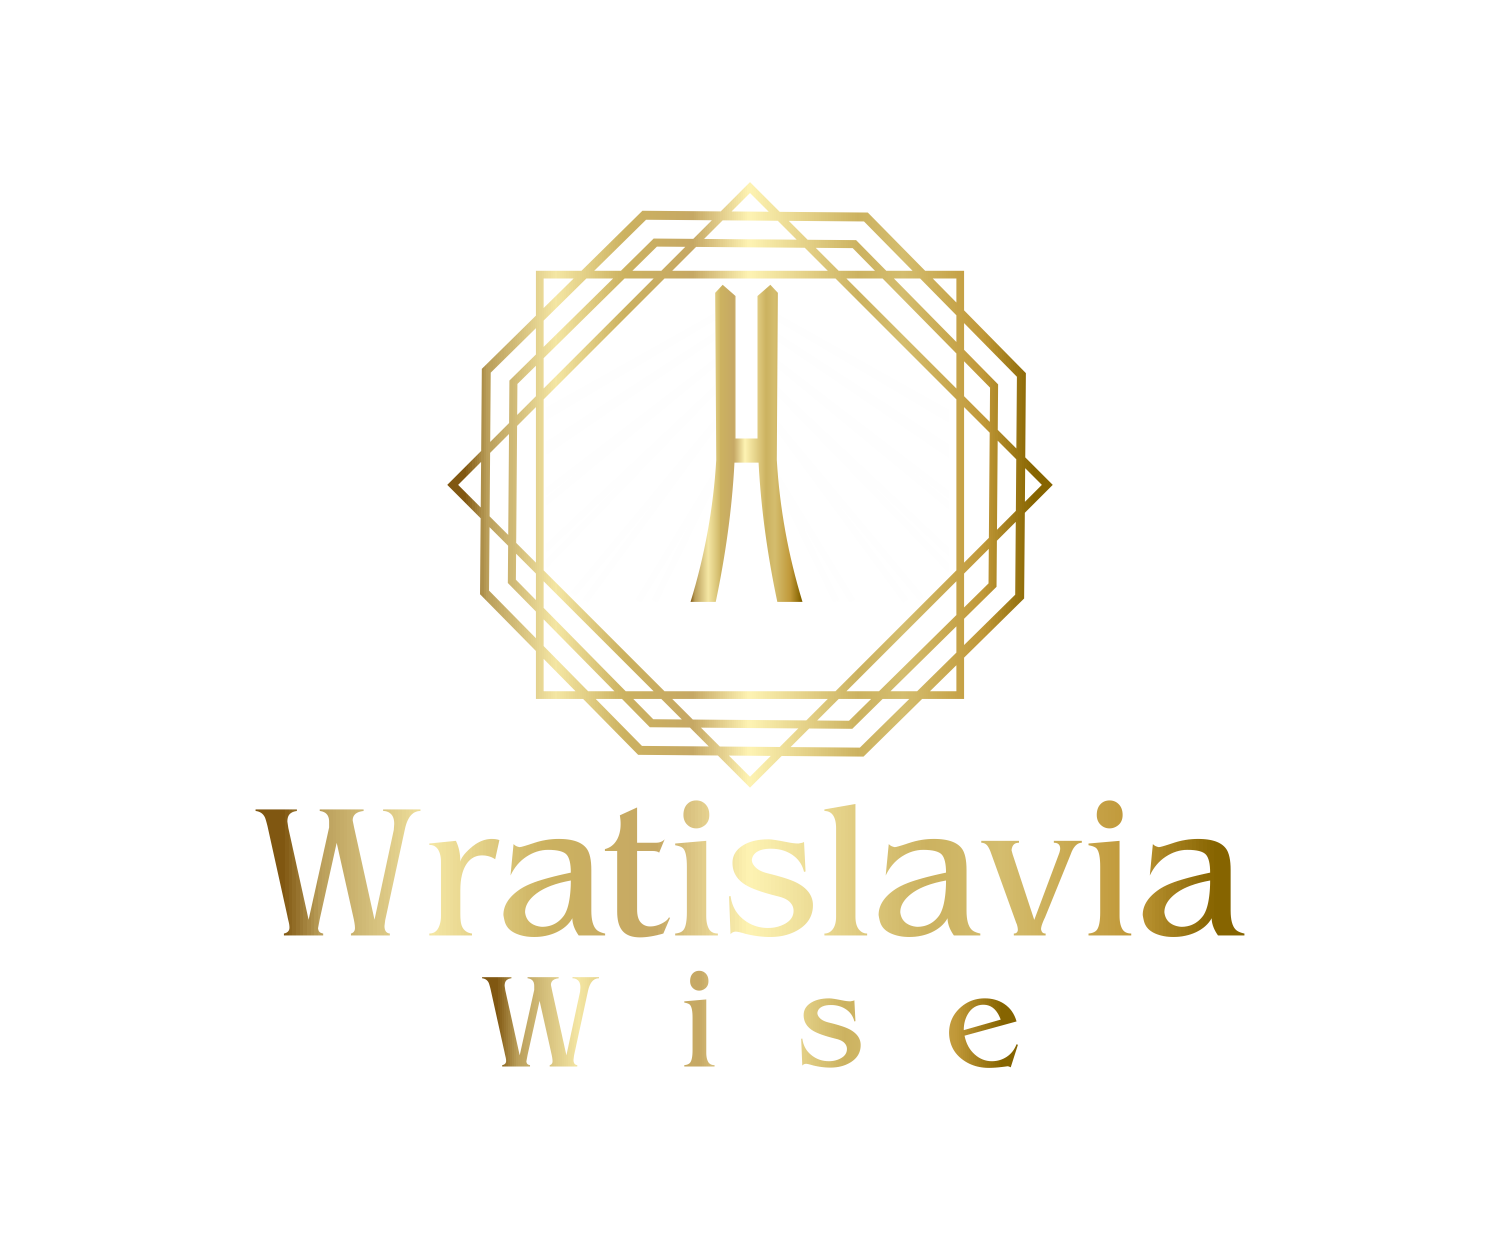 Wratislavia Wise